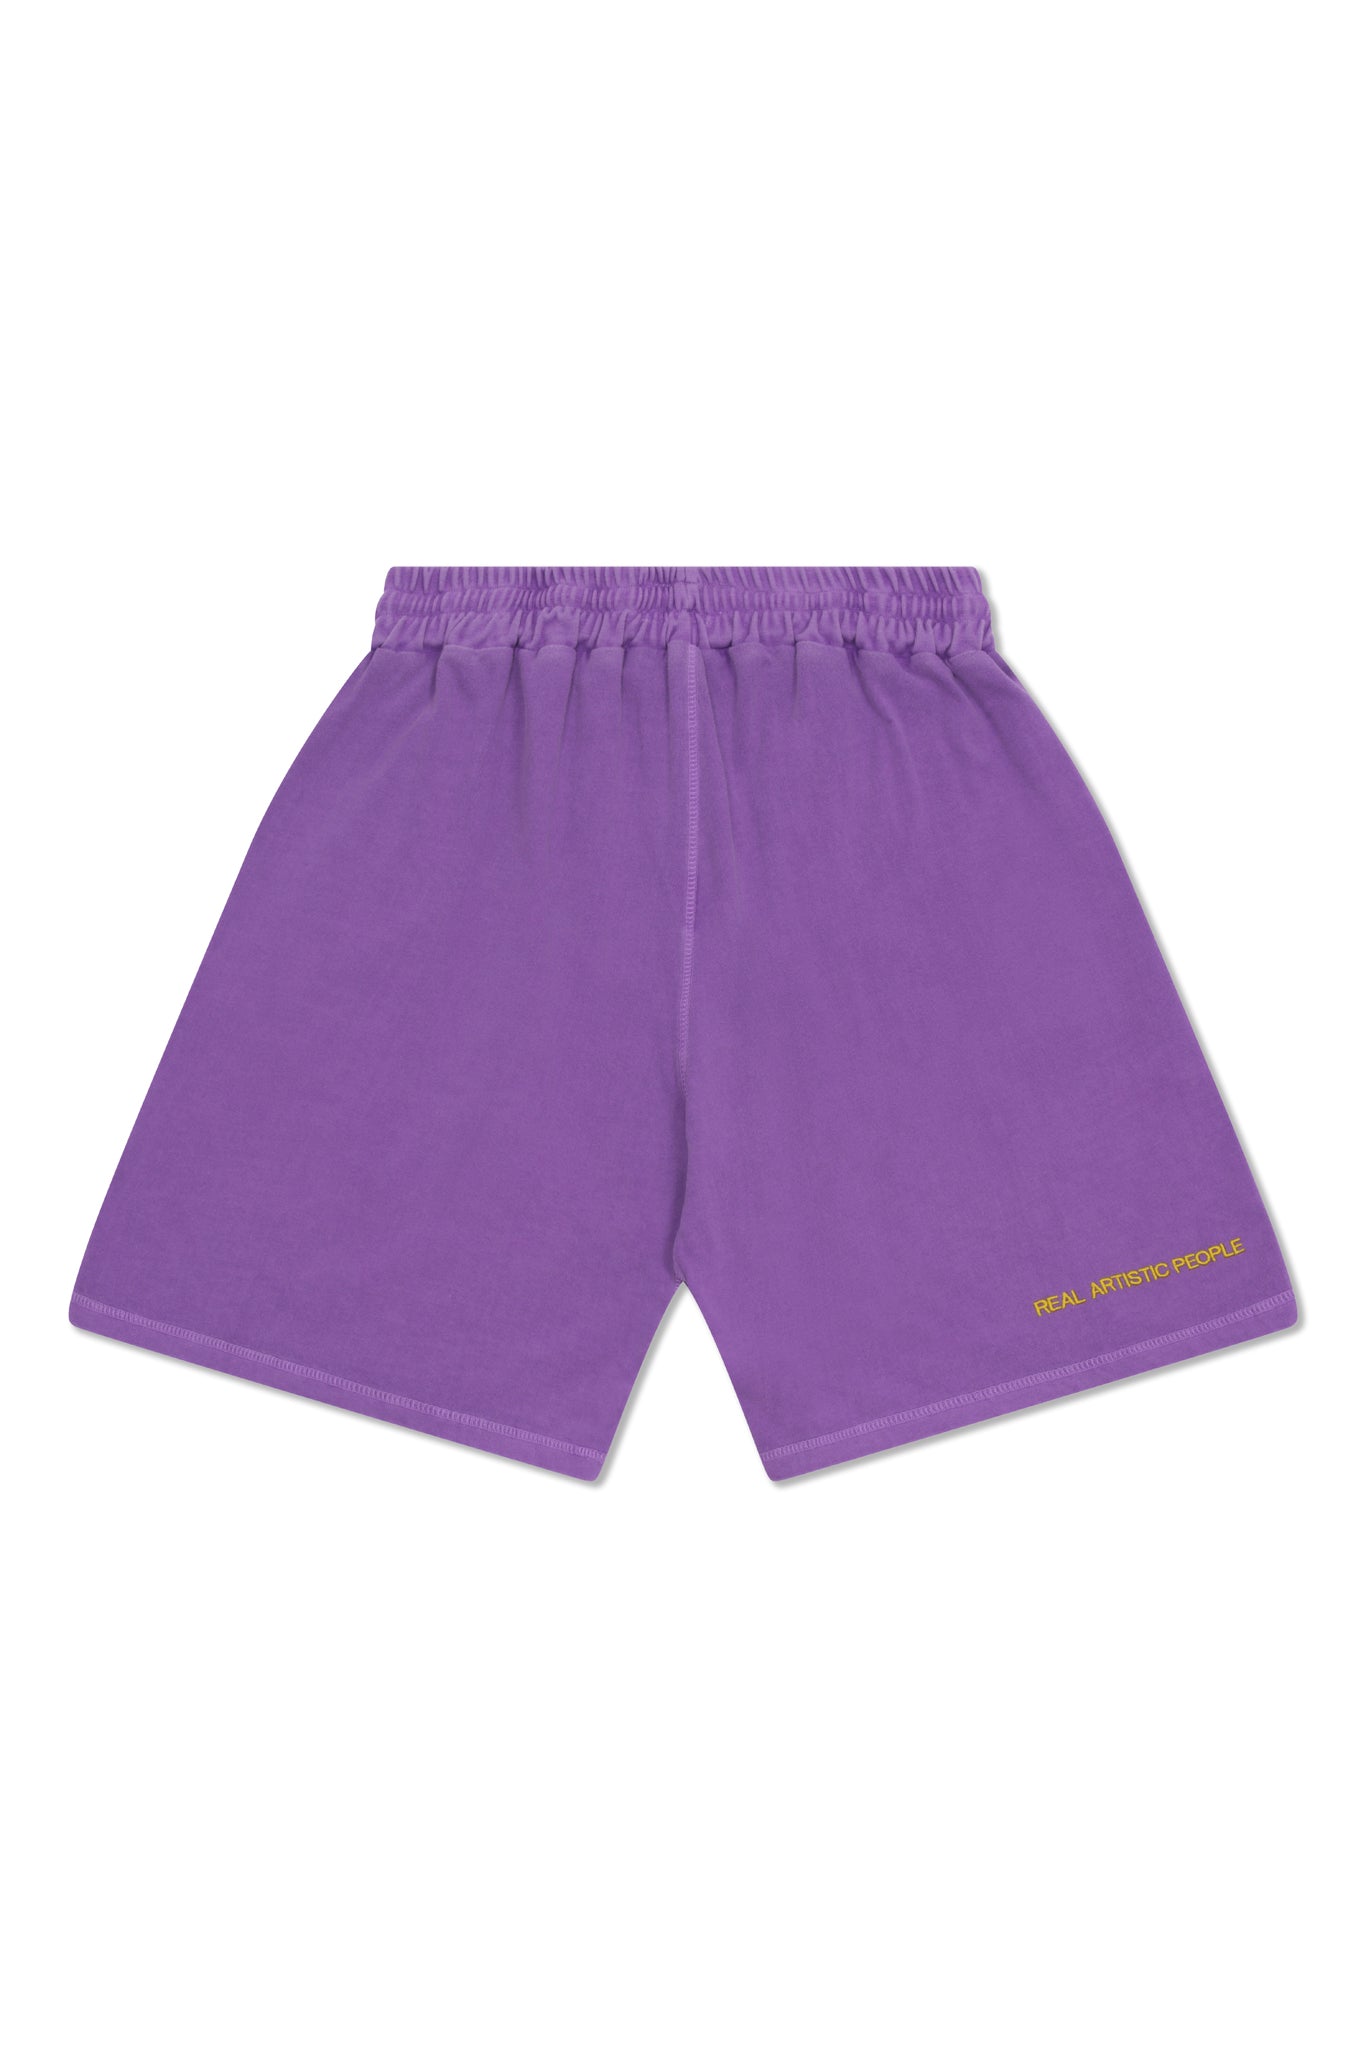 Heir Oversized Shorts Purple - RealArtisticPeople